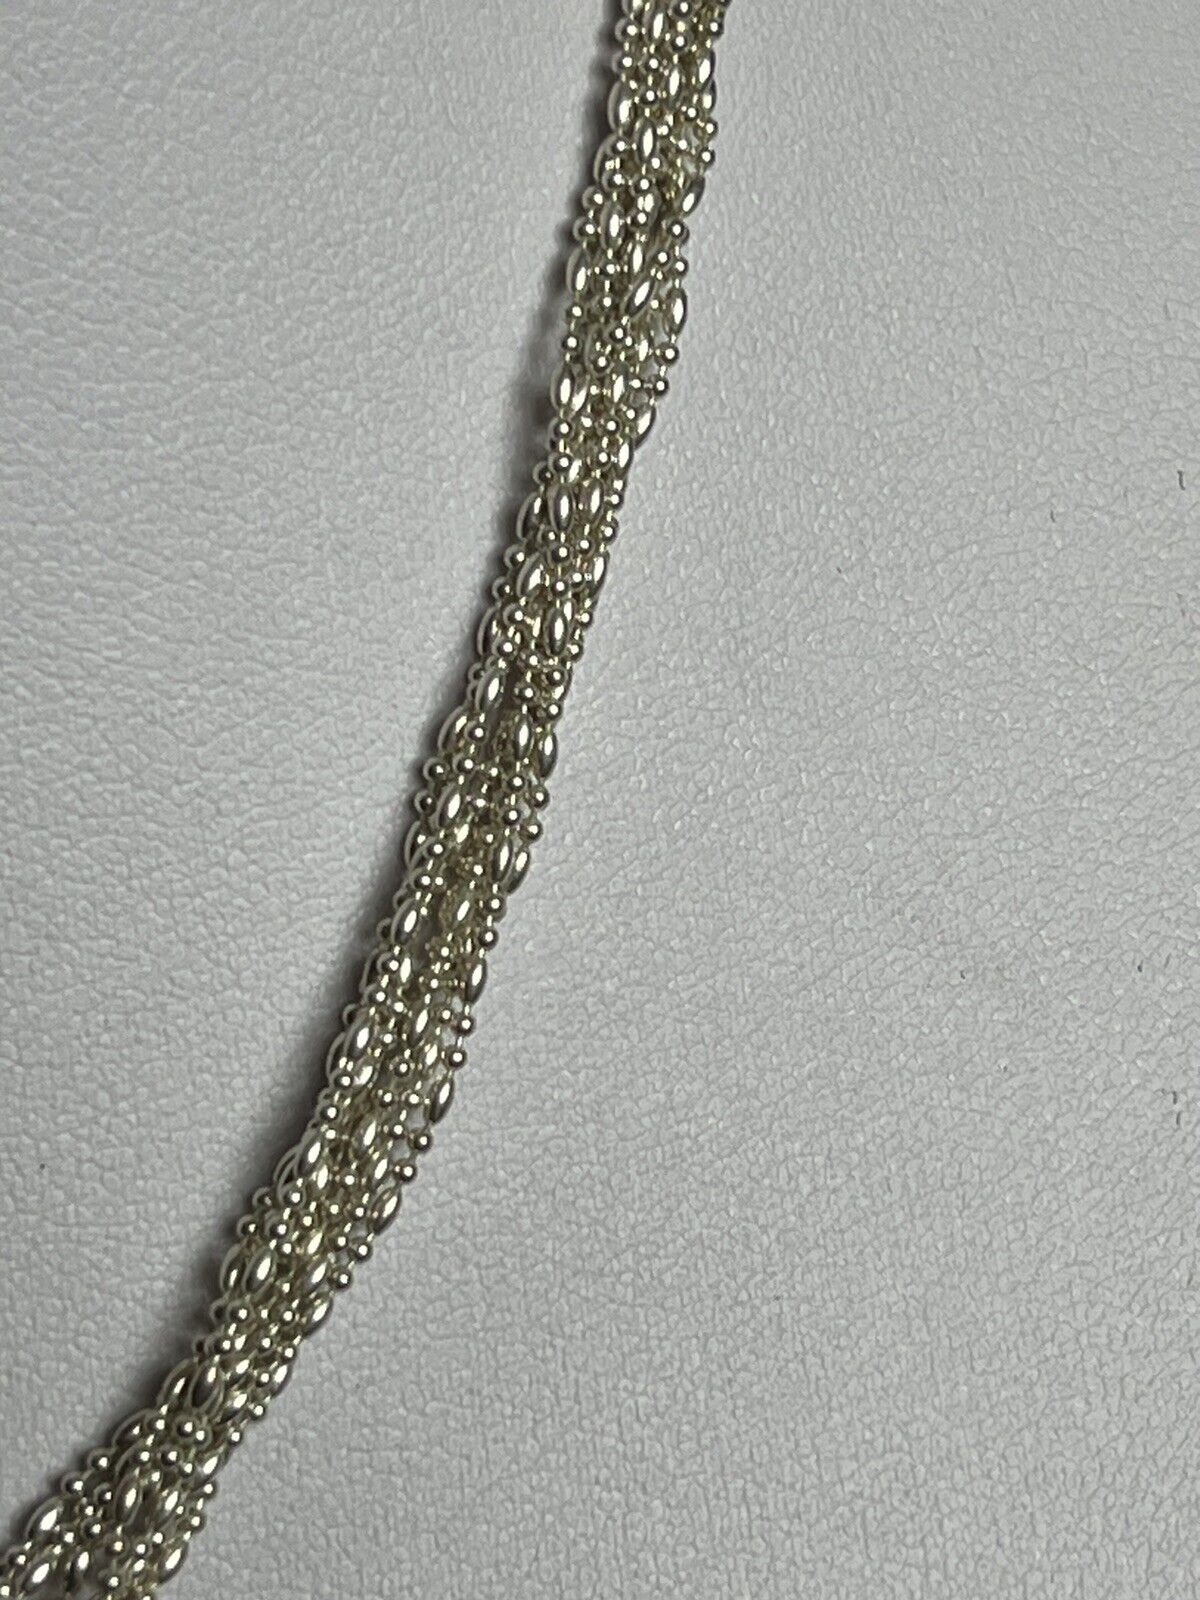 Vintage Silver 925 Multi Strand Necklace